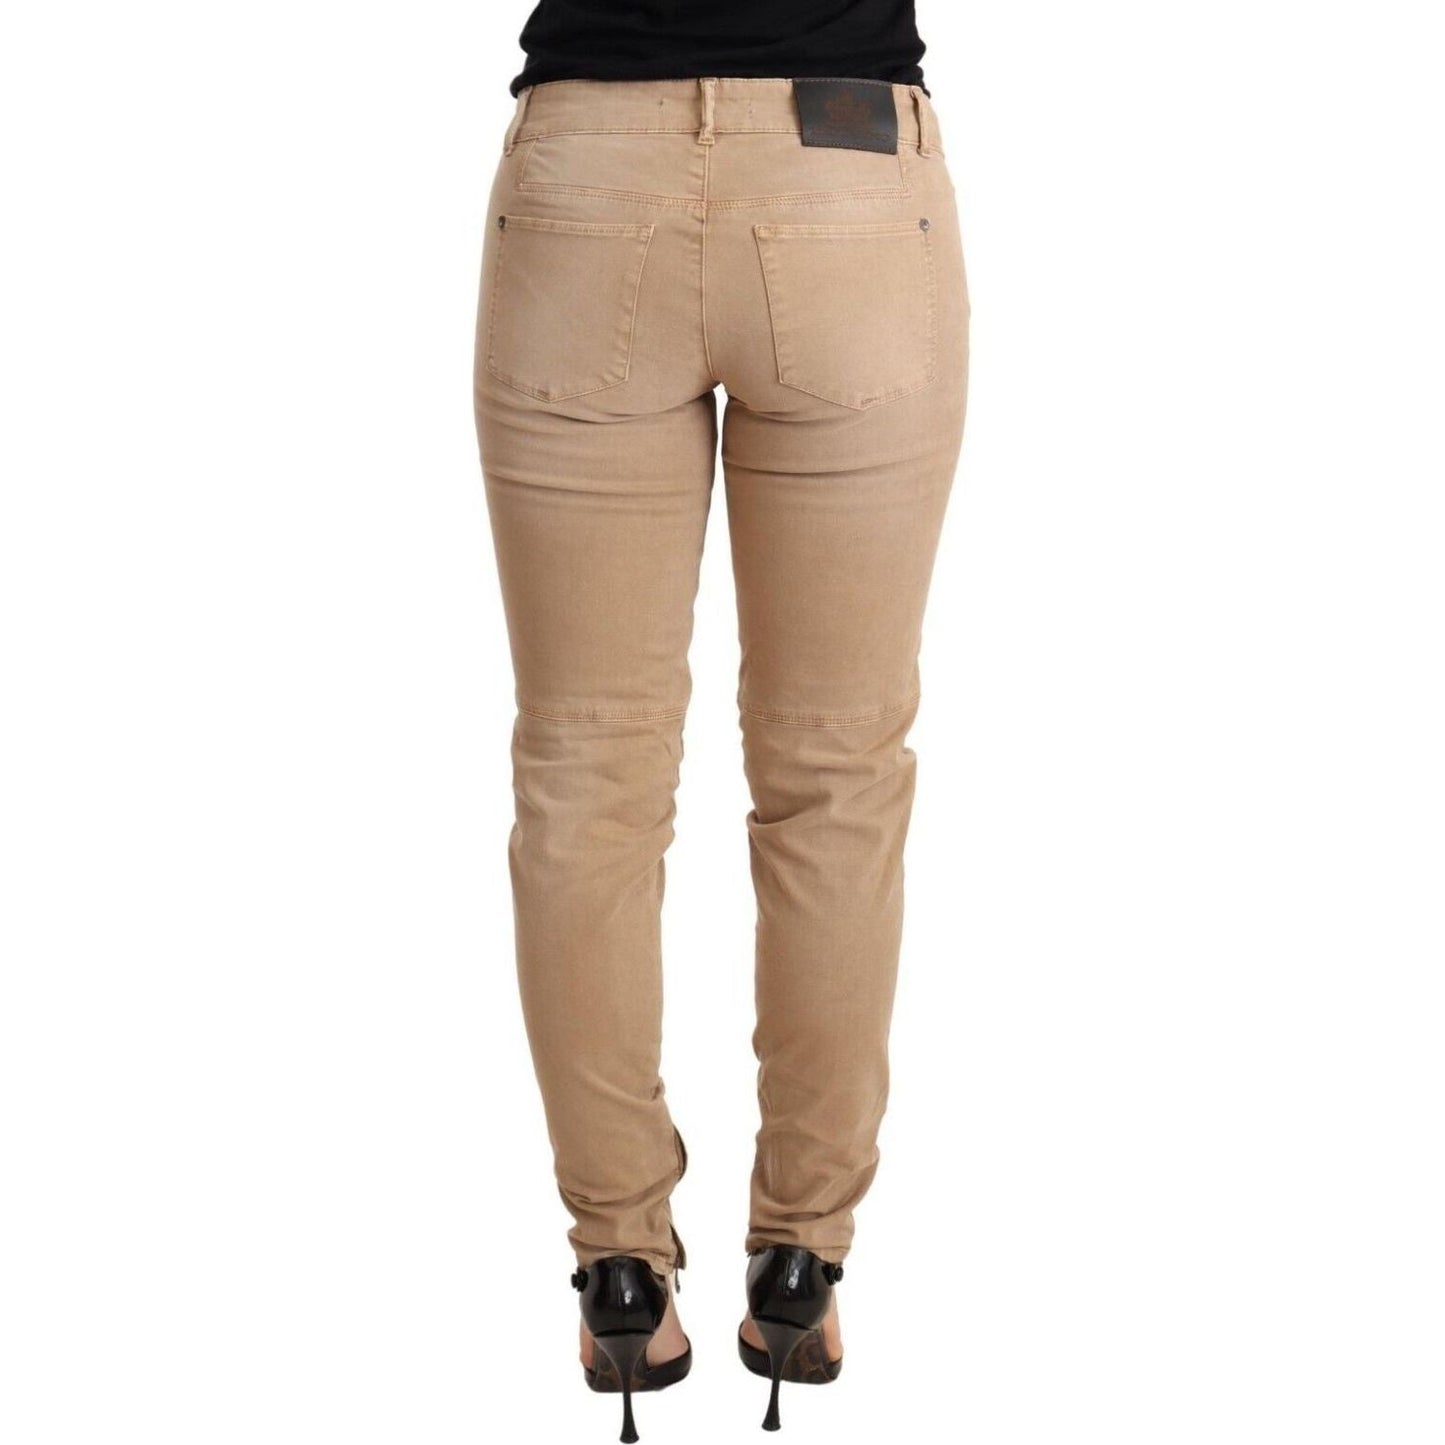 Ermanno Scervino Chic Low Waist Skinny Cotton Trousers Jeans & Pants brown-low-waist-skinny-denim-trouser-cotton-jeans